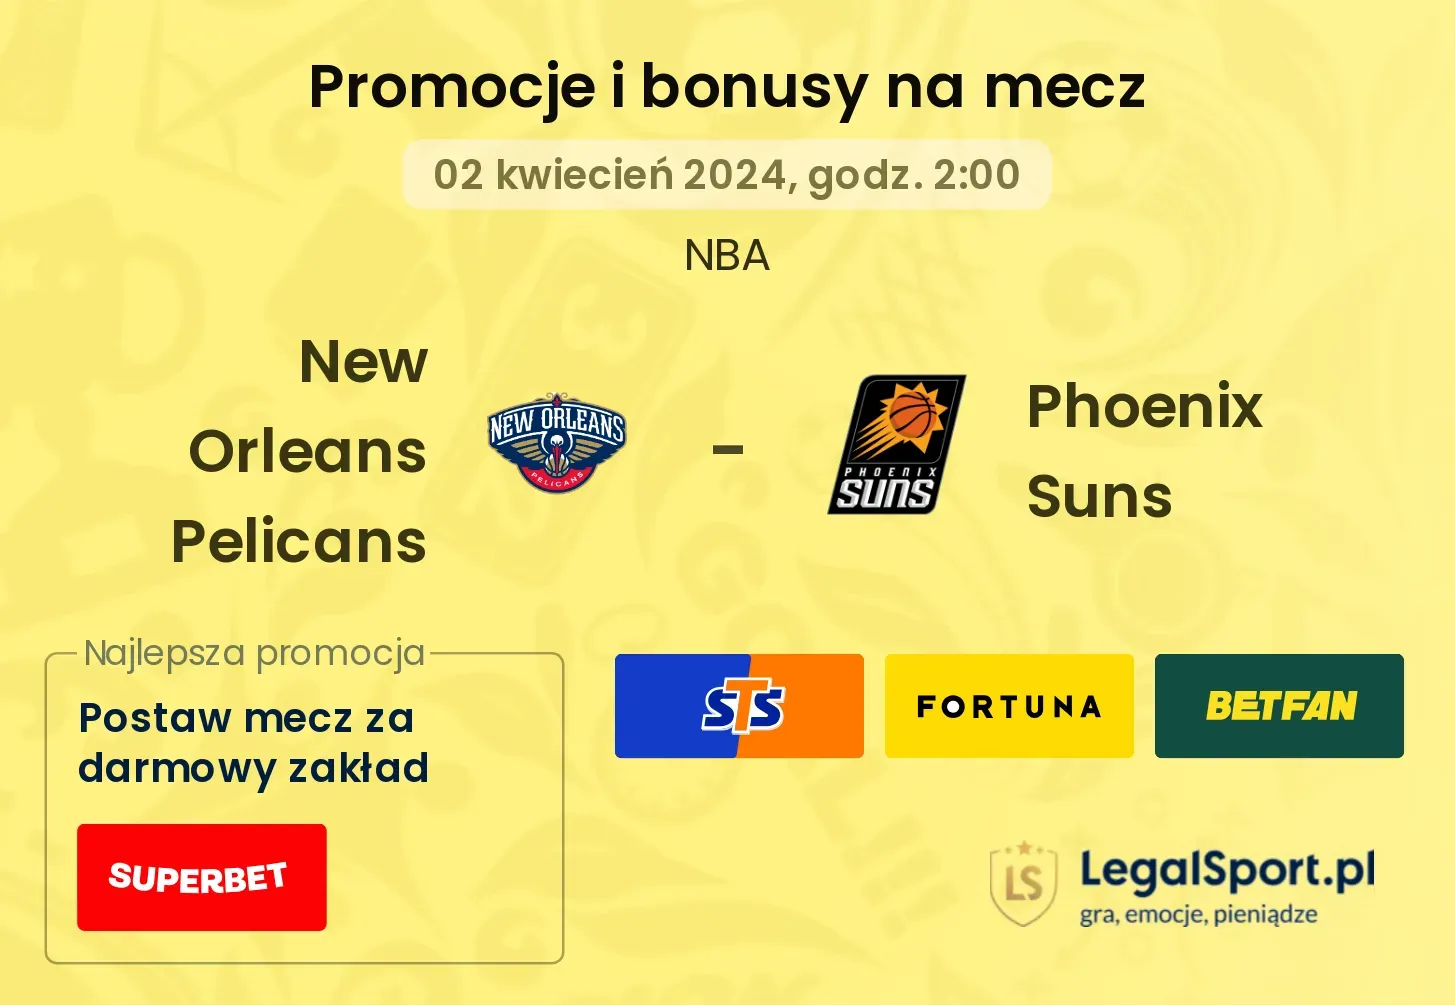 New Orleans Pelicans - Phoenix Suns promocje bonusy na mecz